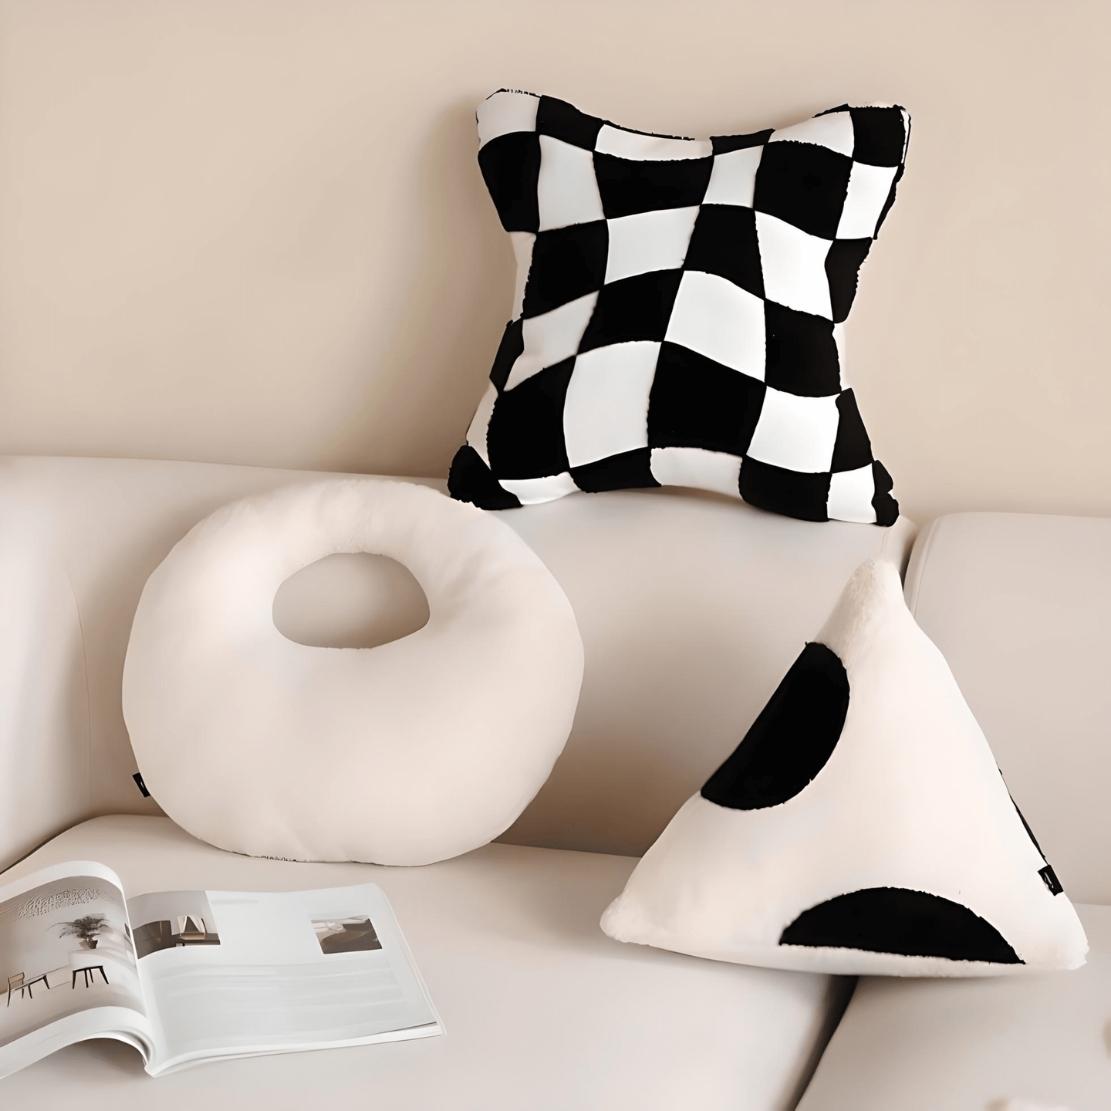 Black & white funky check decorative throw cushions